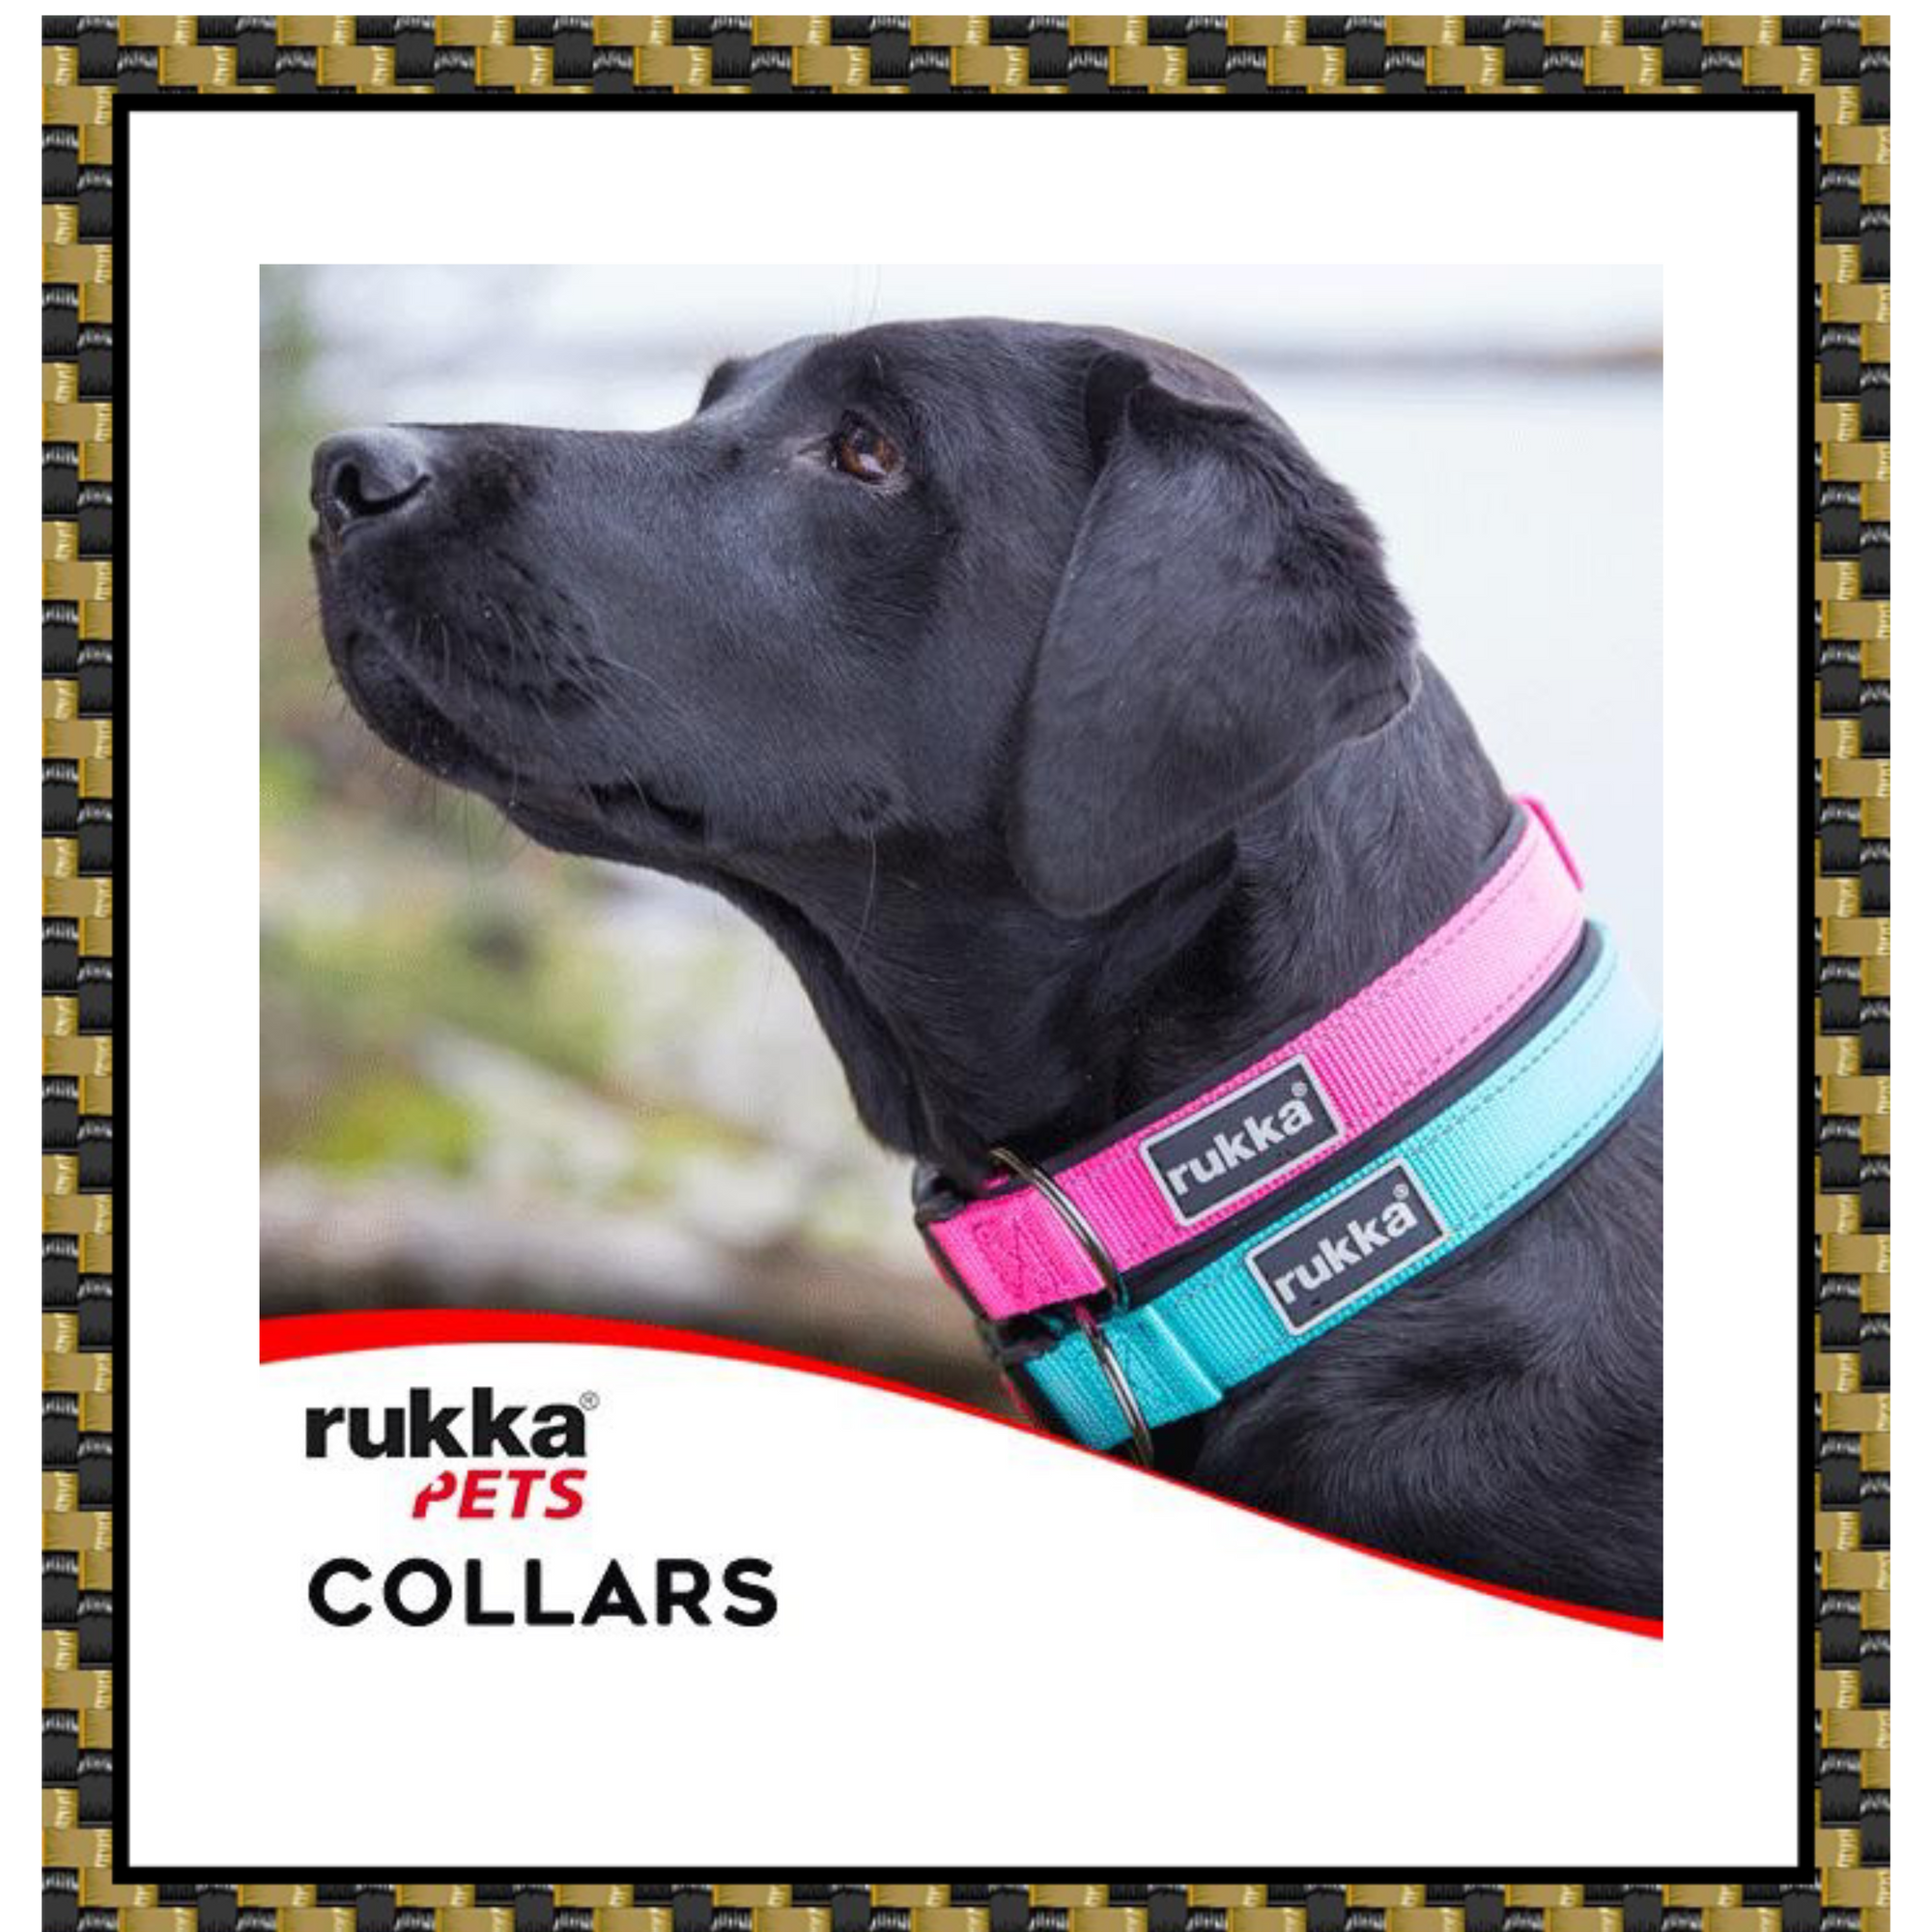 Rukka Pets Collars